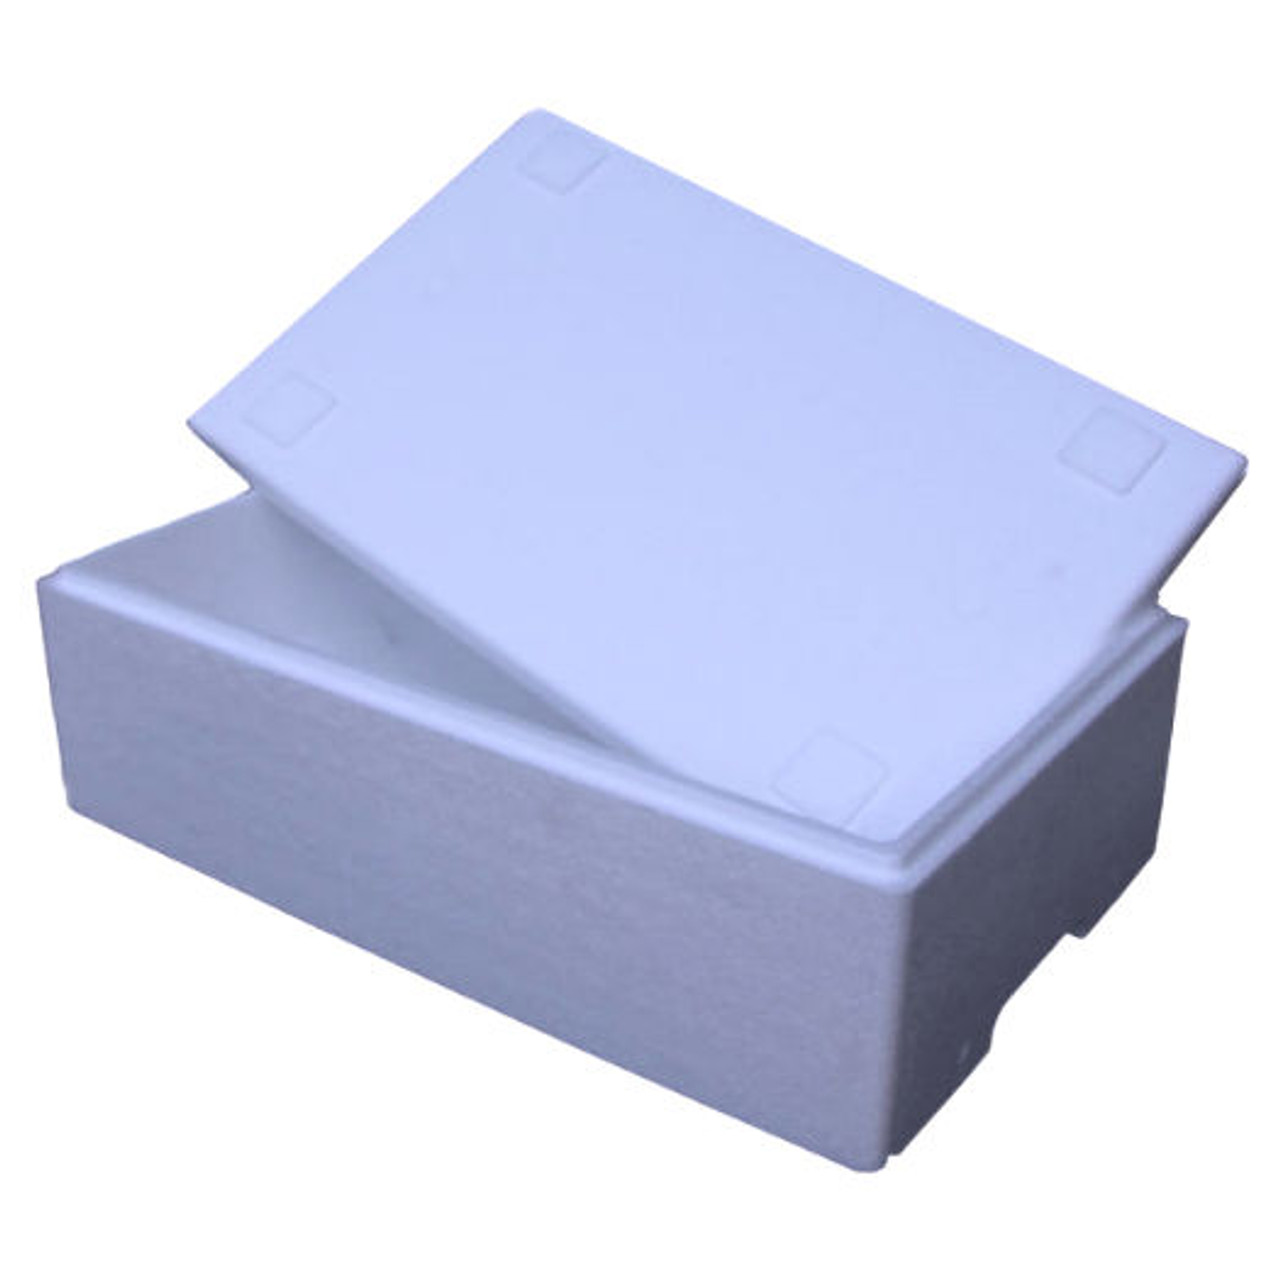 15klo 590x365x180mm p/styrne box & lids - 25 Boxes